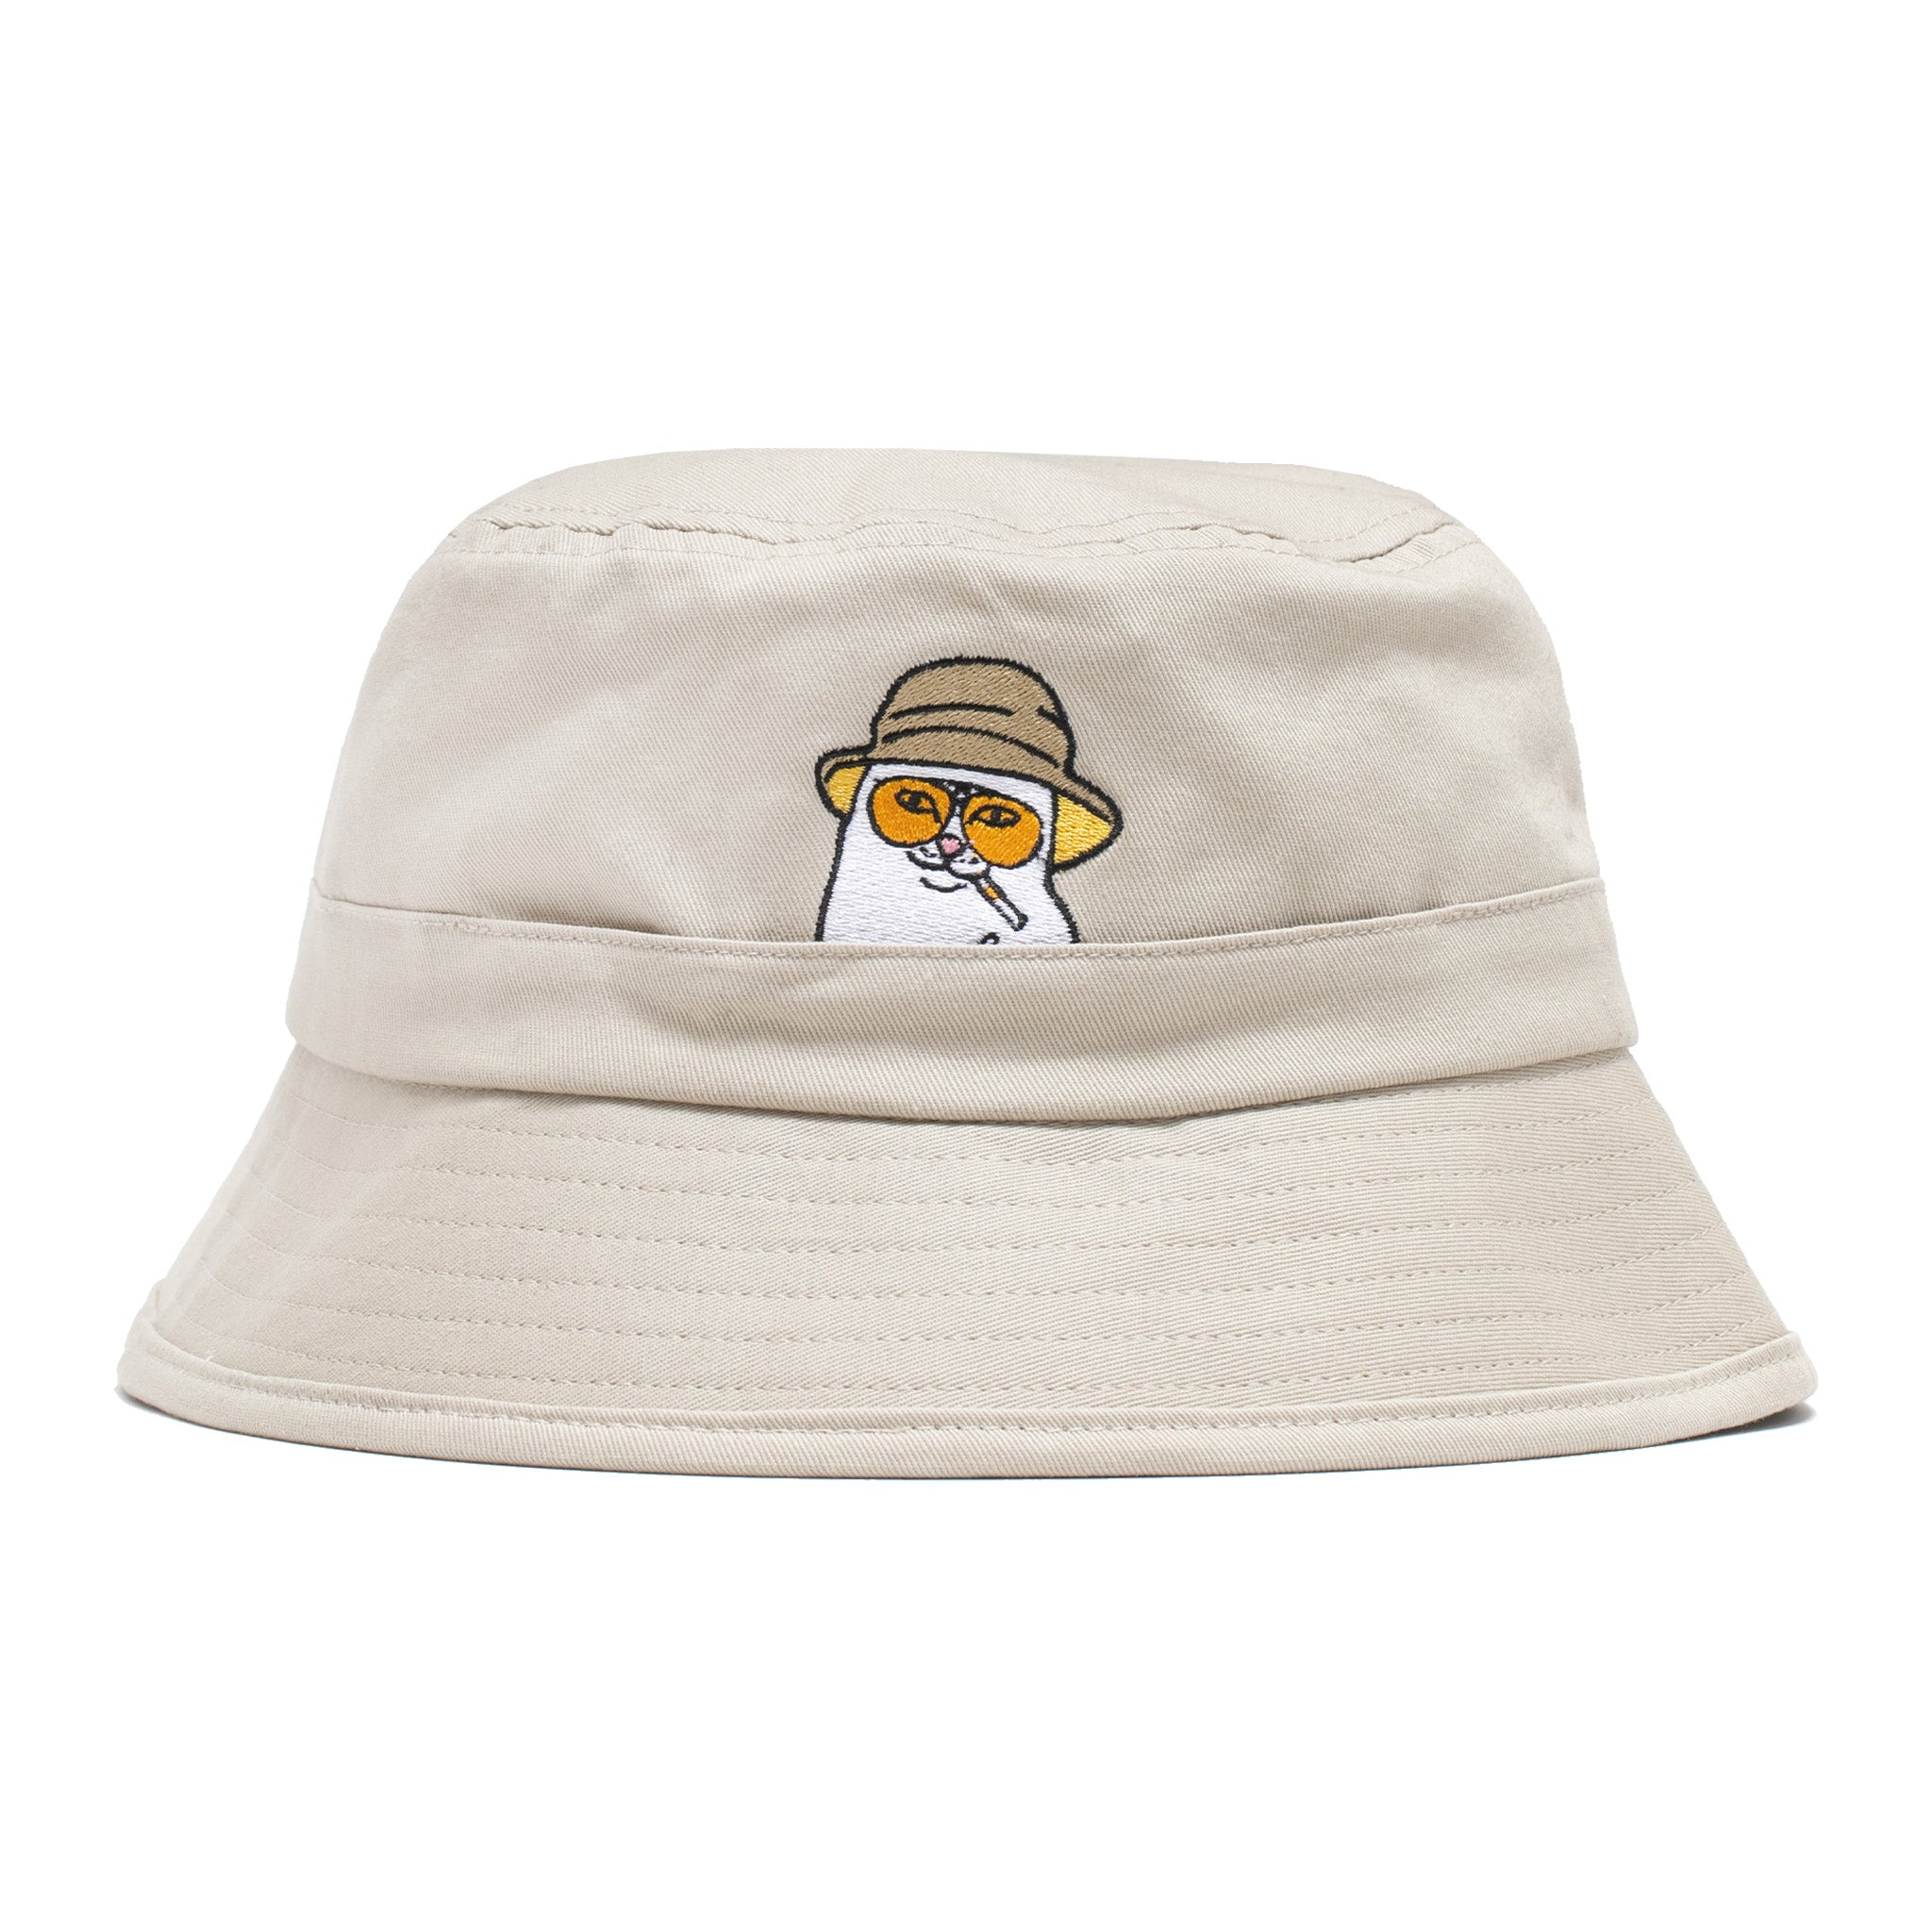 Nermal S Thompson Bucket Hat (Tan)